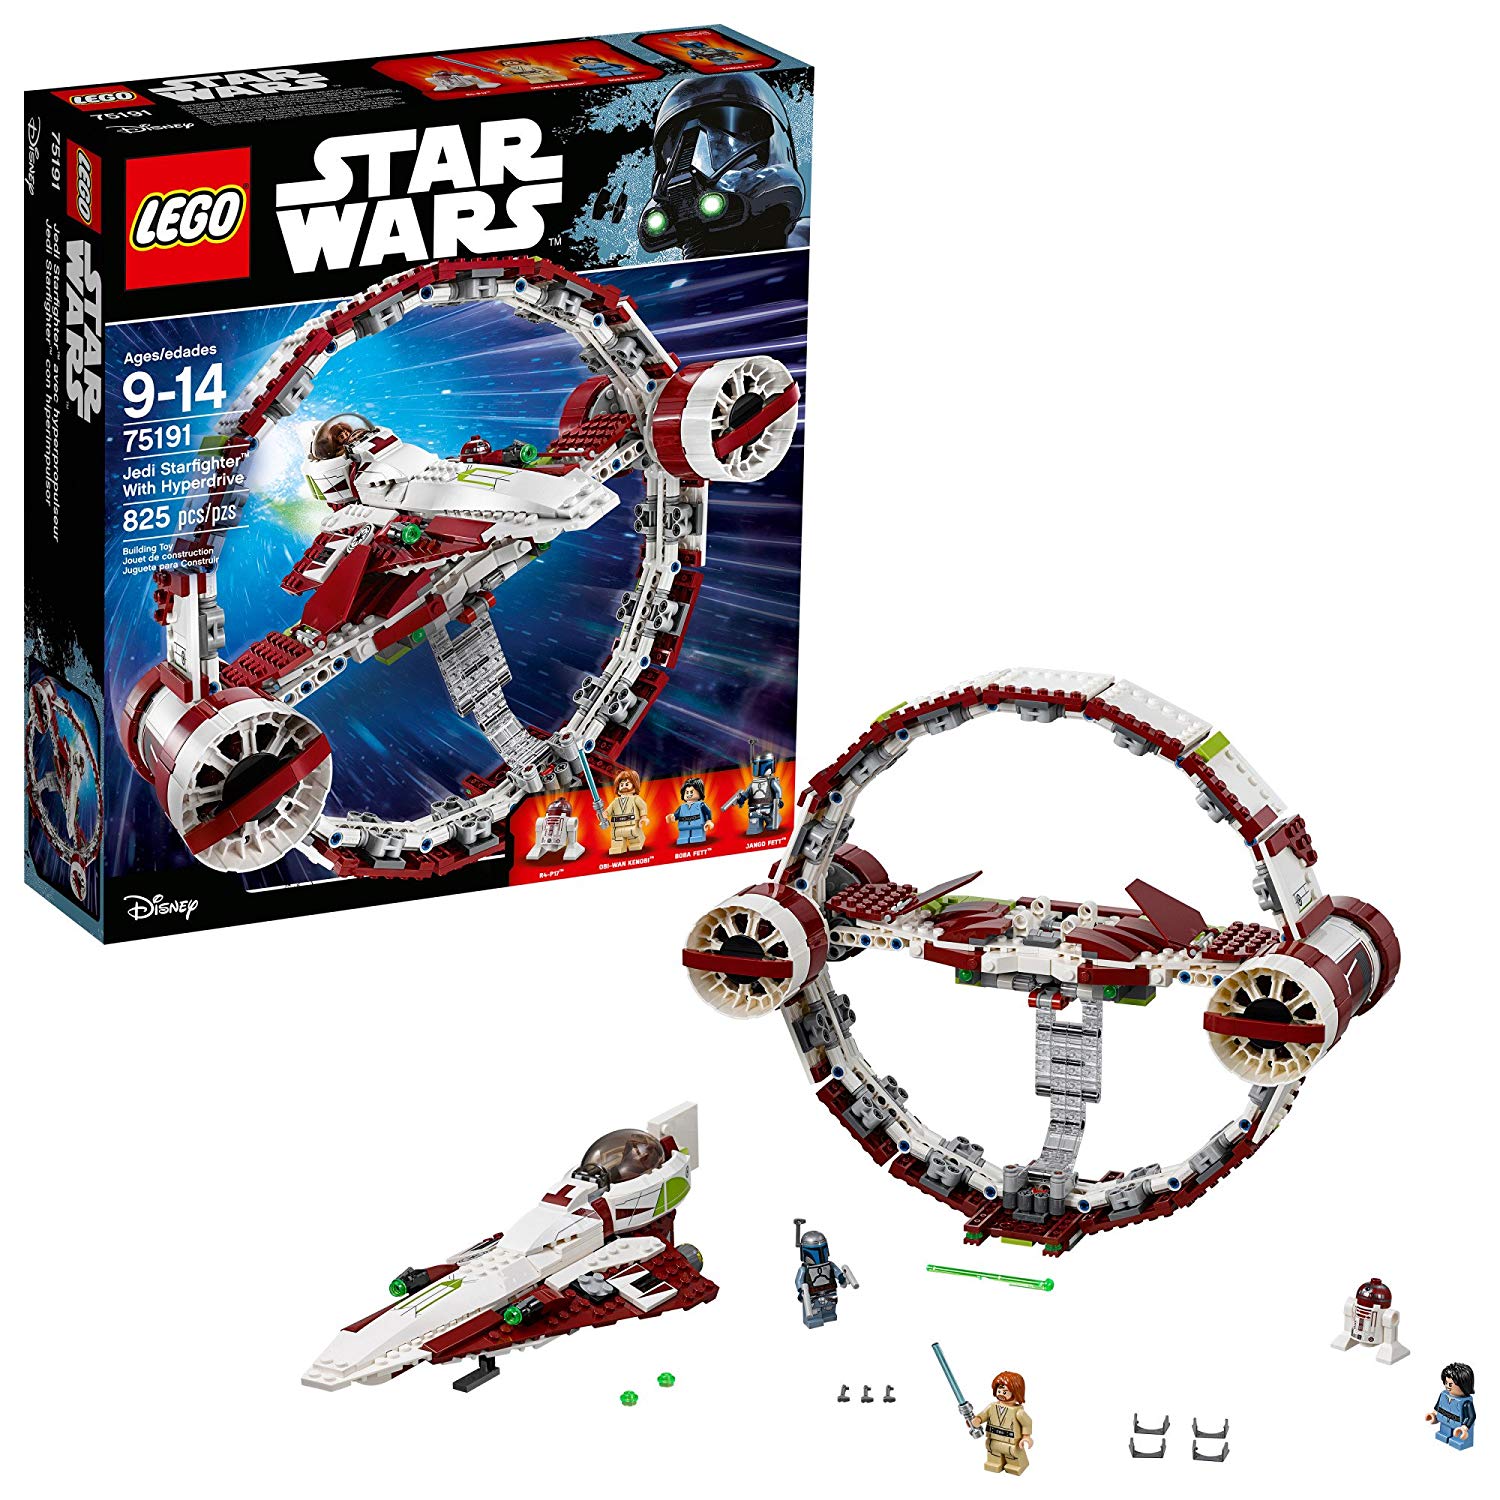 Lego New Star Wars Jedi Starfighter With Hyperdrive